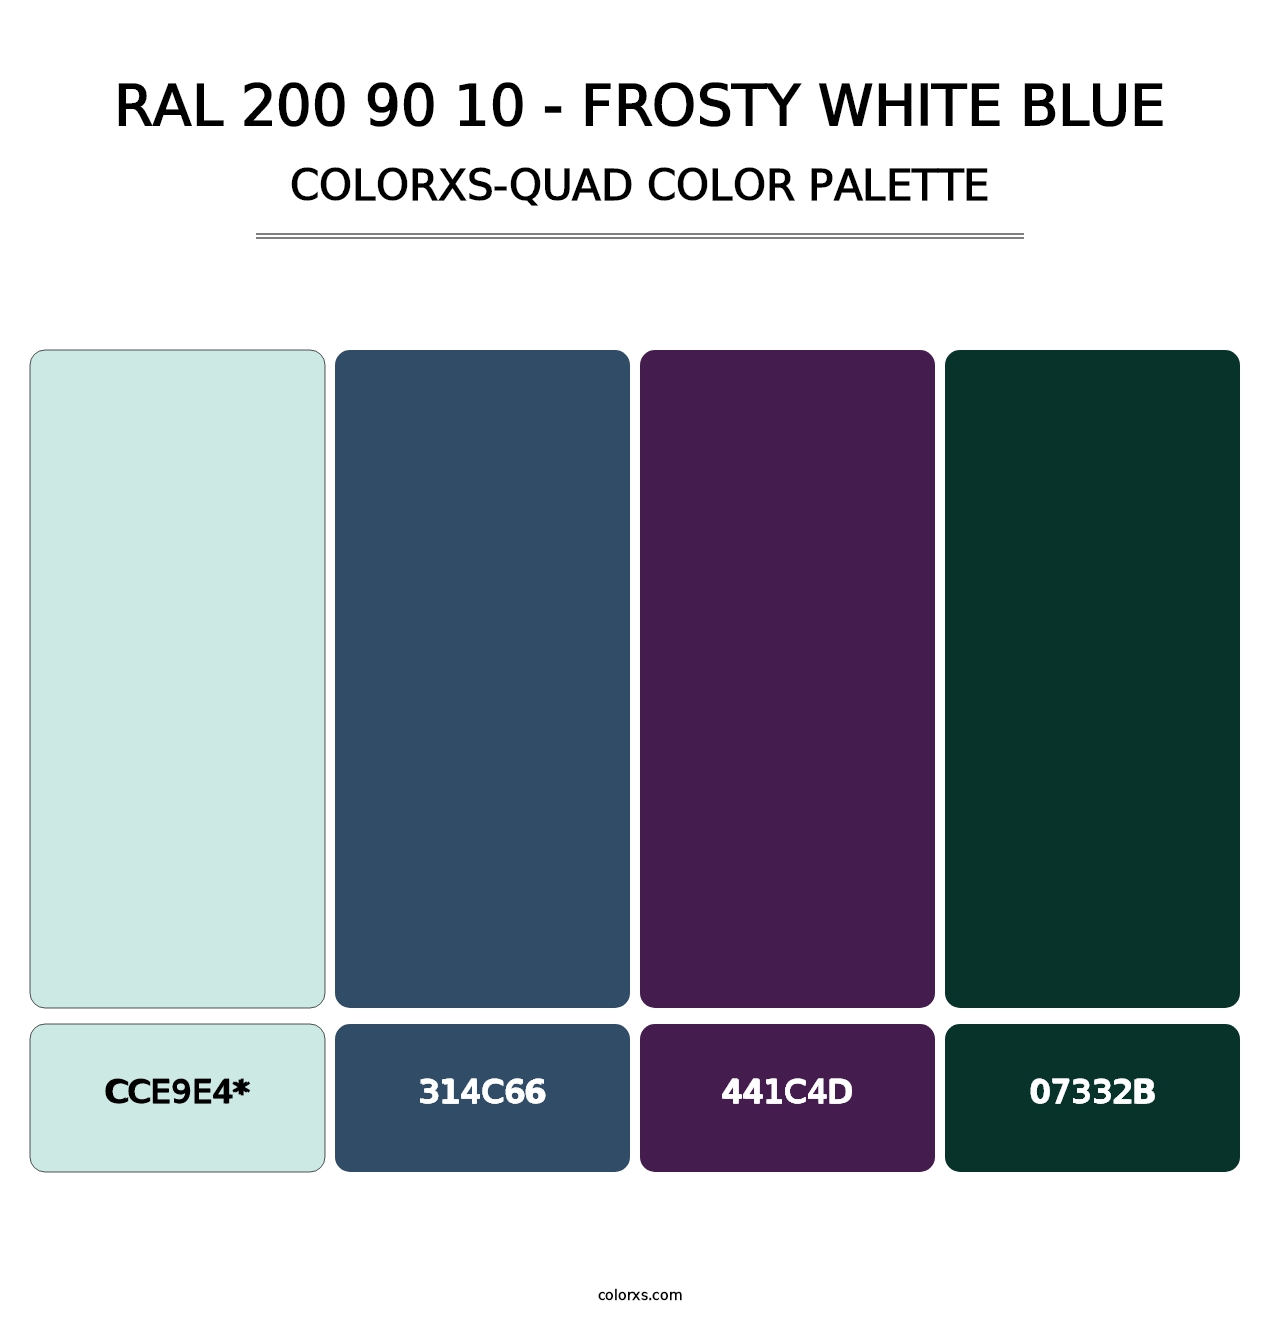 RAL 200 90 10 - Frosty White Blue - Colorxs Quad Palette